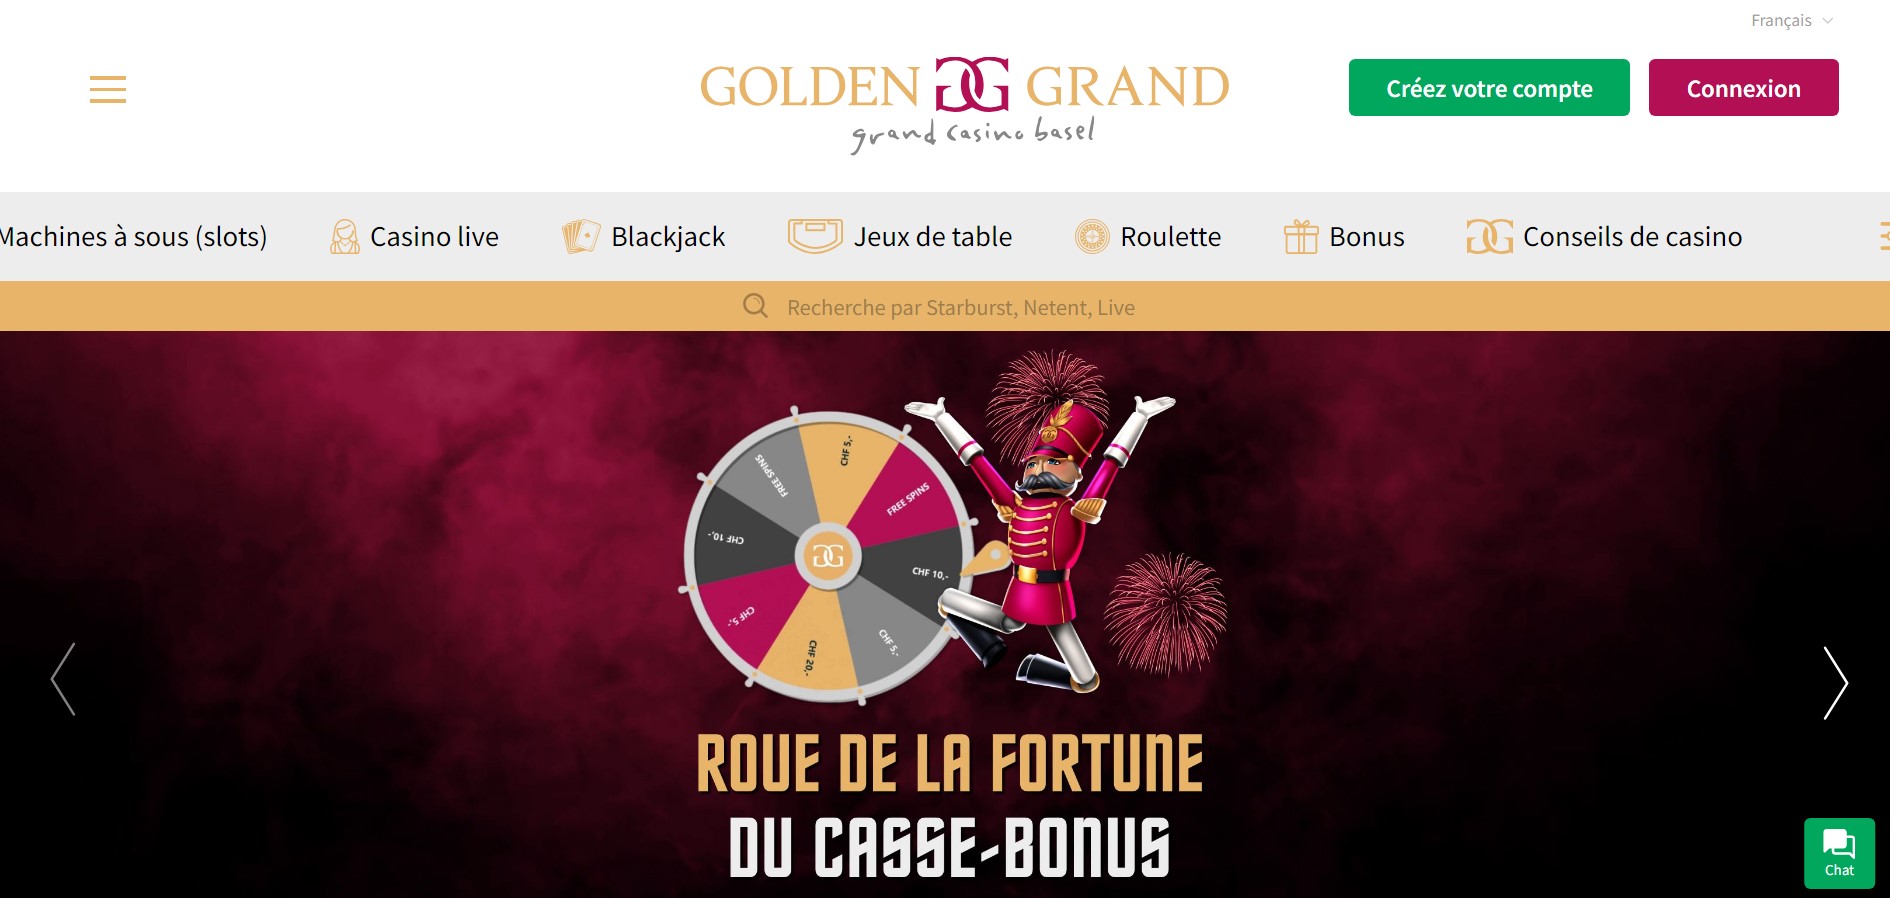 Programme de bonus du casino Golden grand